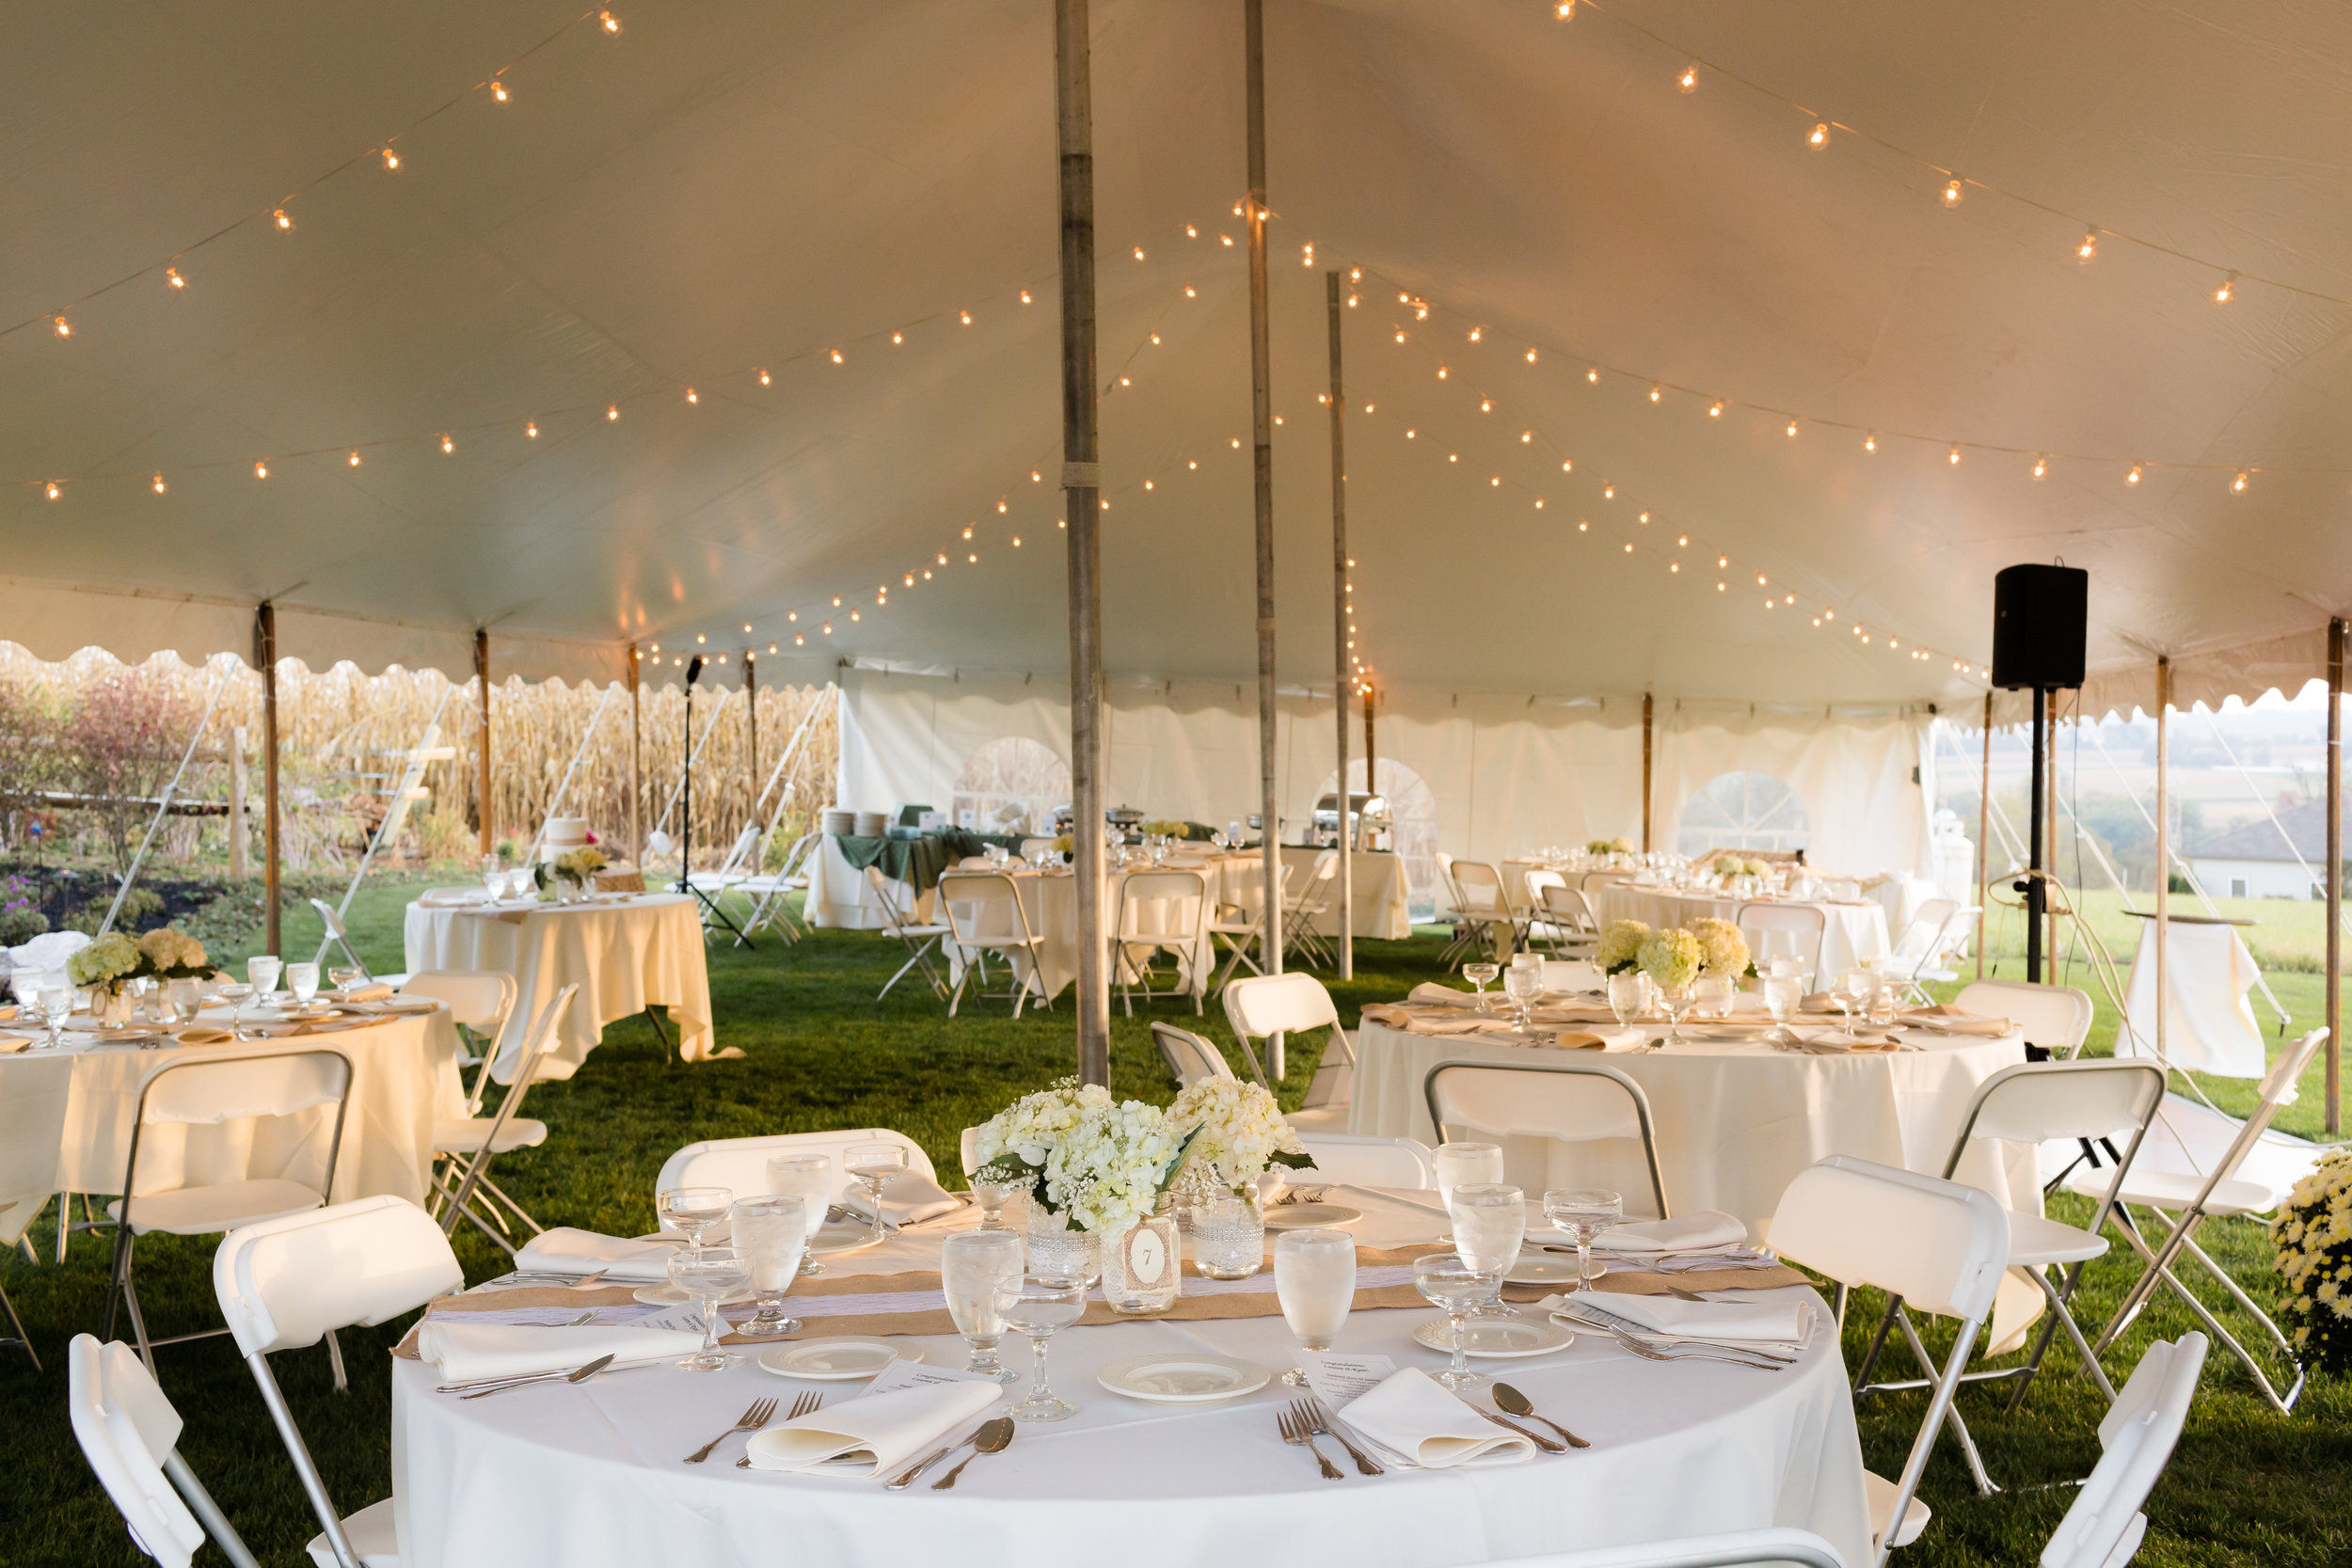 Wedding tent